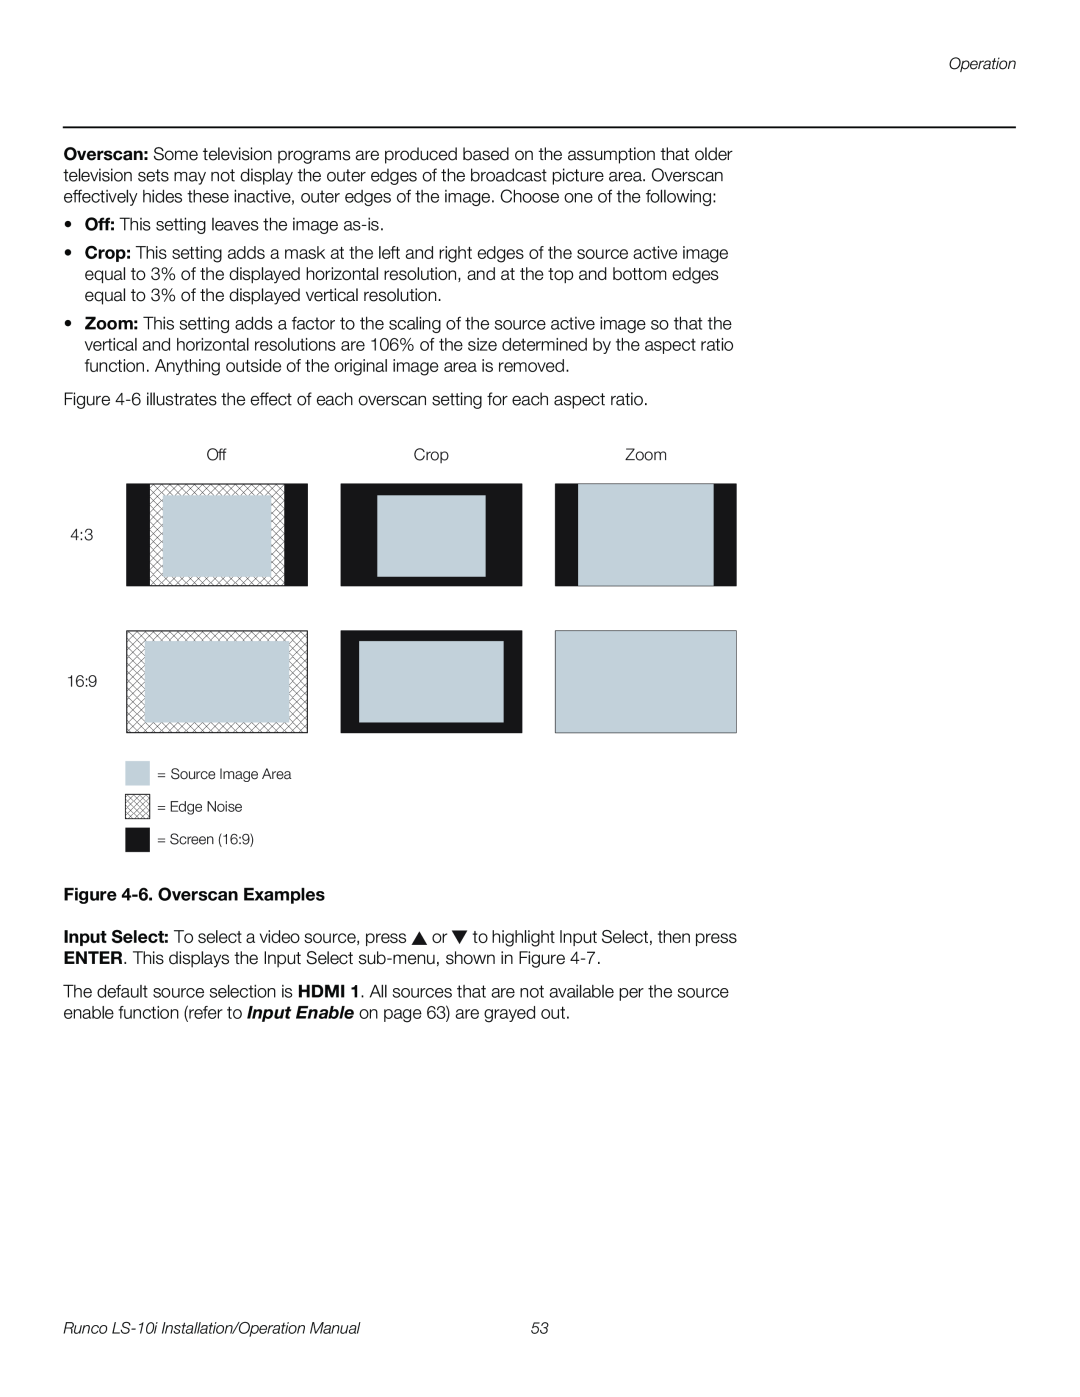 Runco LS-10I operation manual 6.Overscan Examples 